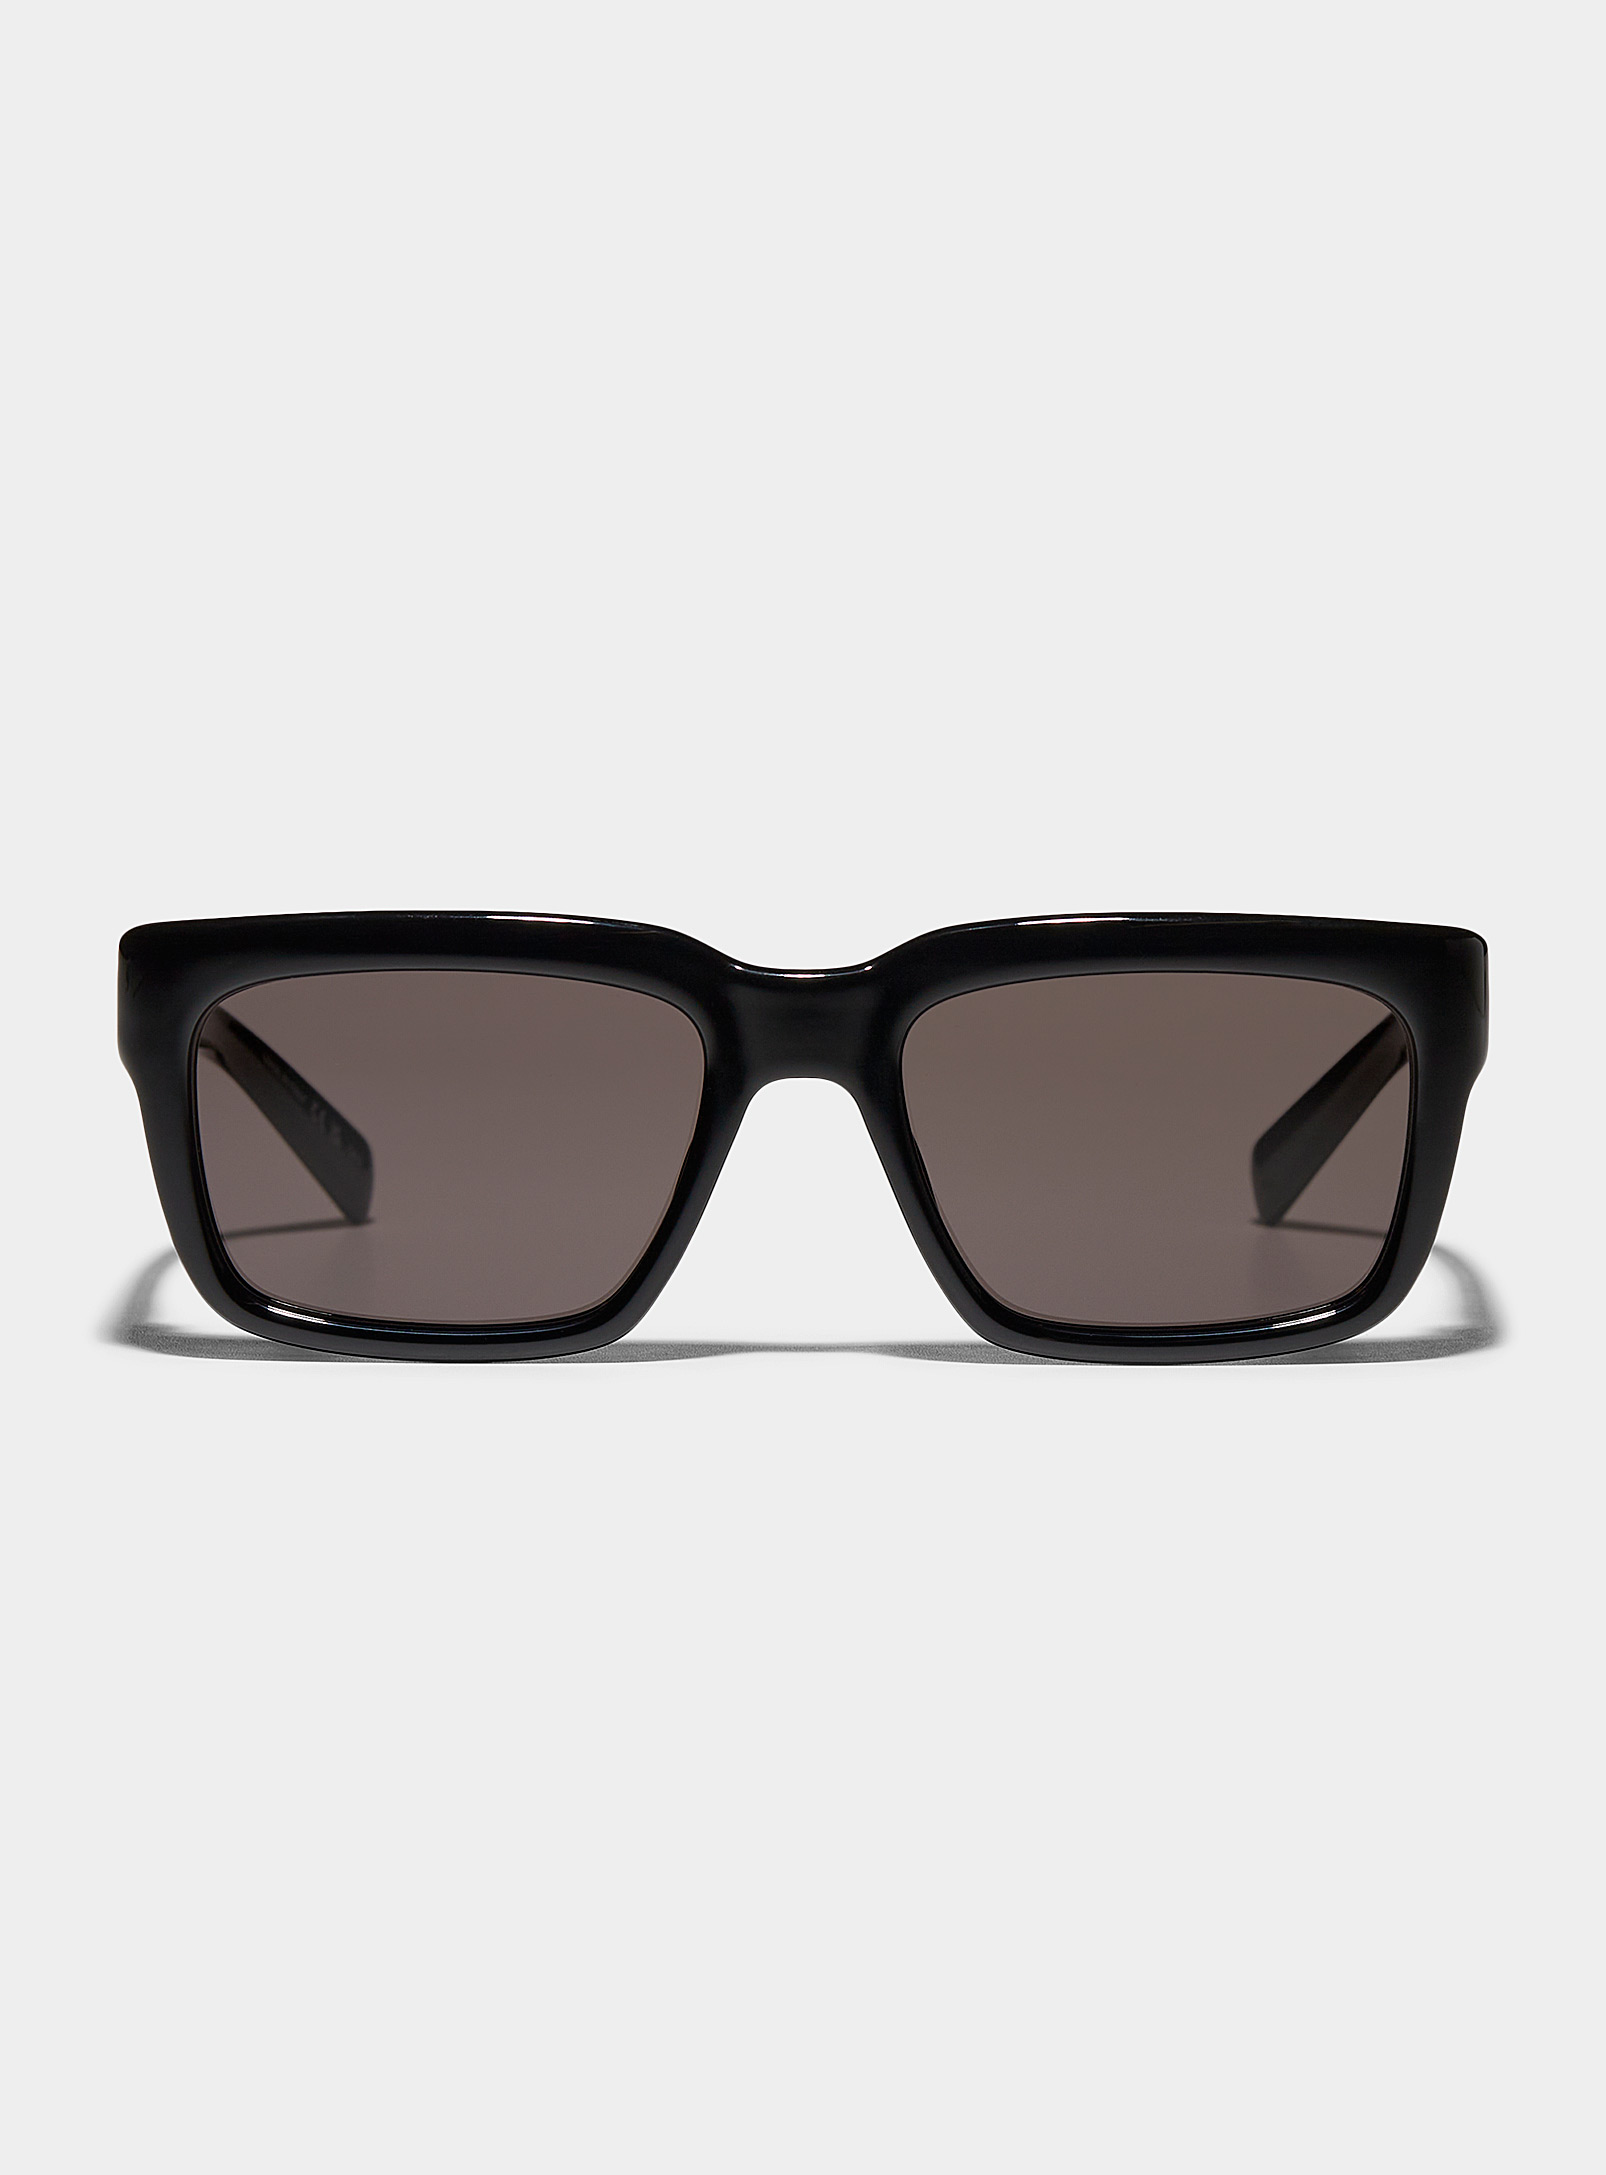 Saint Laurent - Glossy black rectangular sunglasses